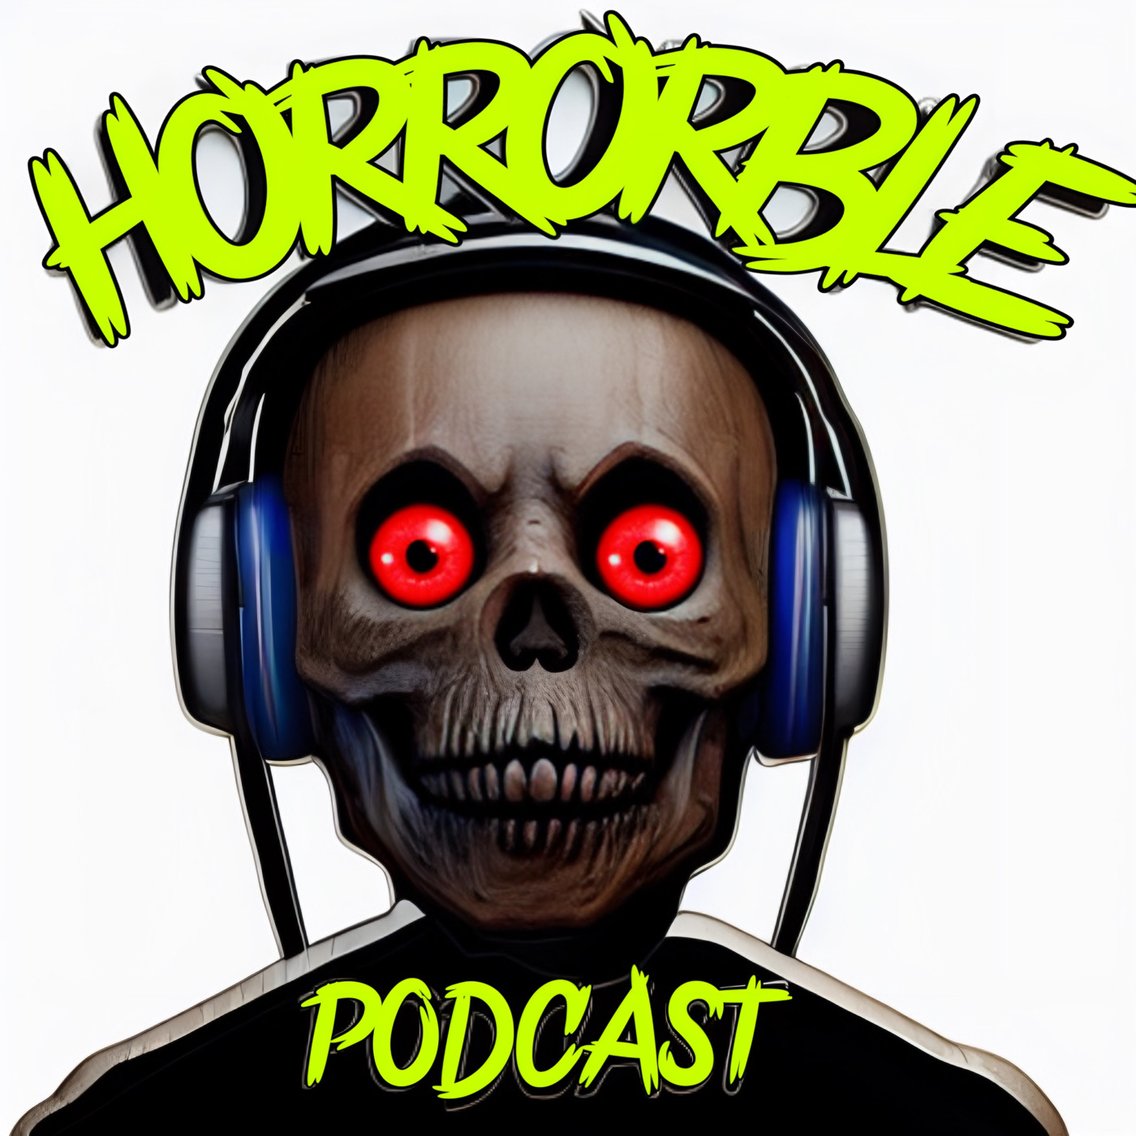 Horrorble Podcast - imagen de portada
